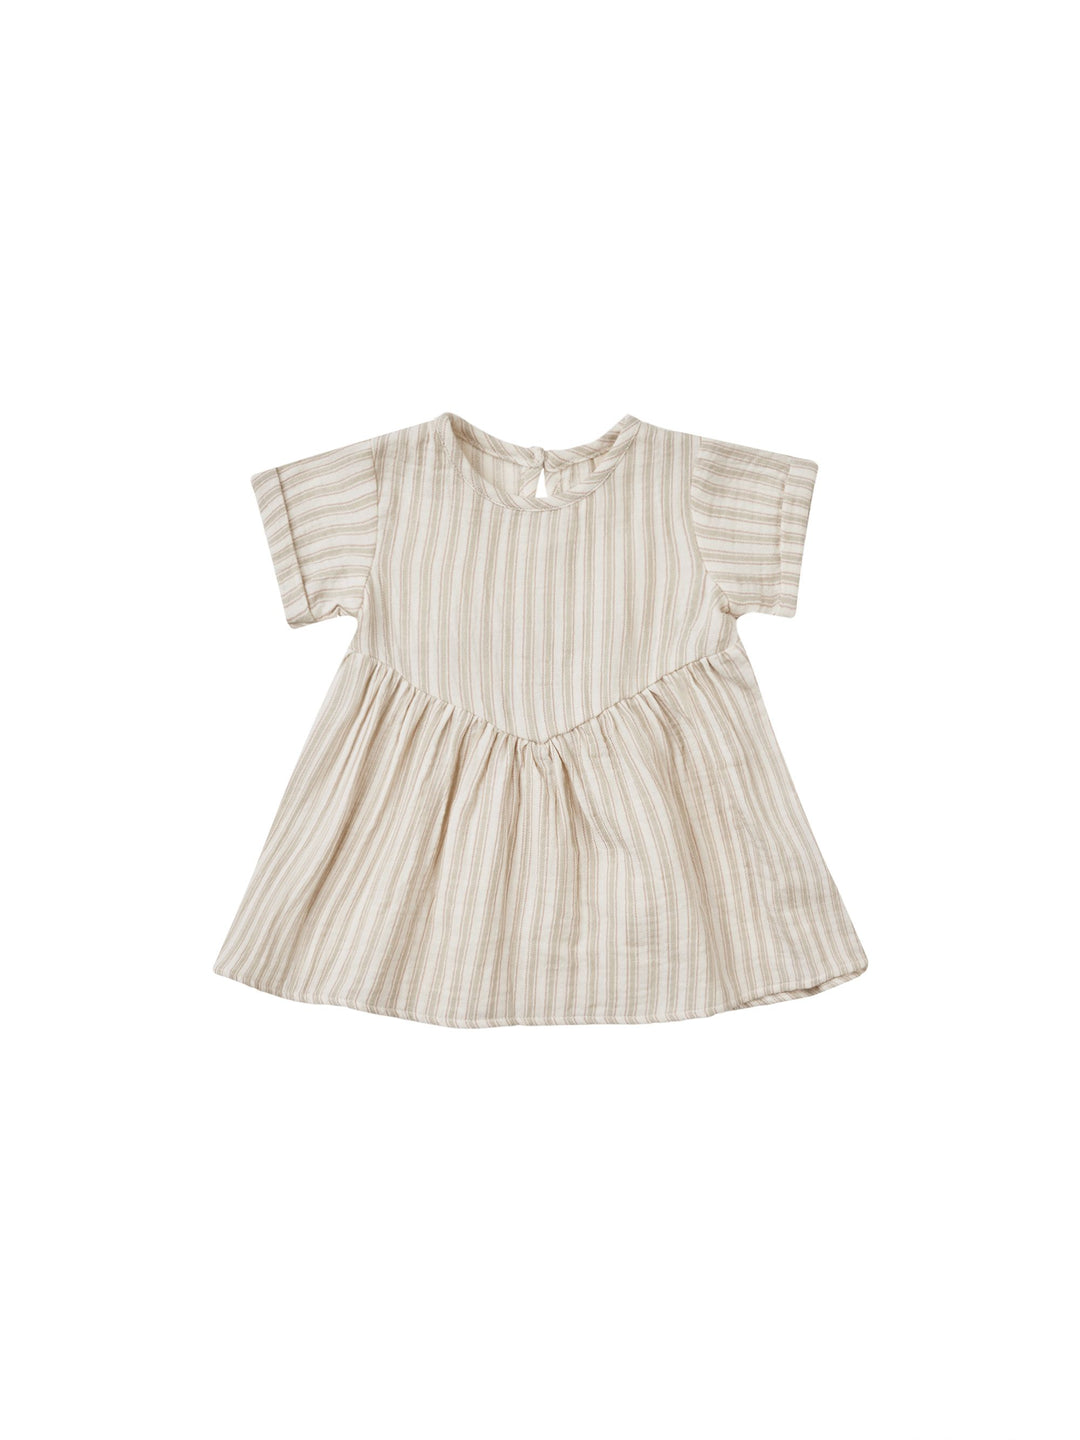 Brielle Dress - Vintage Stripe